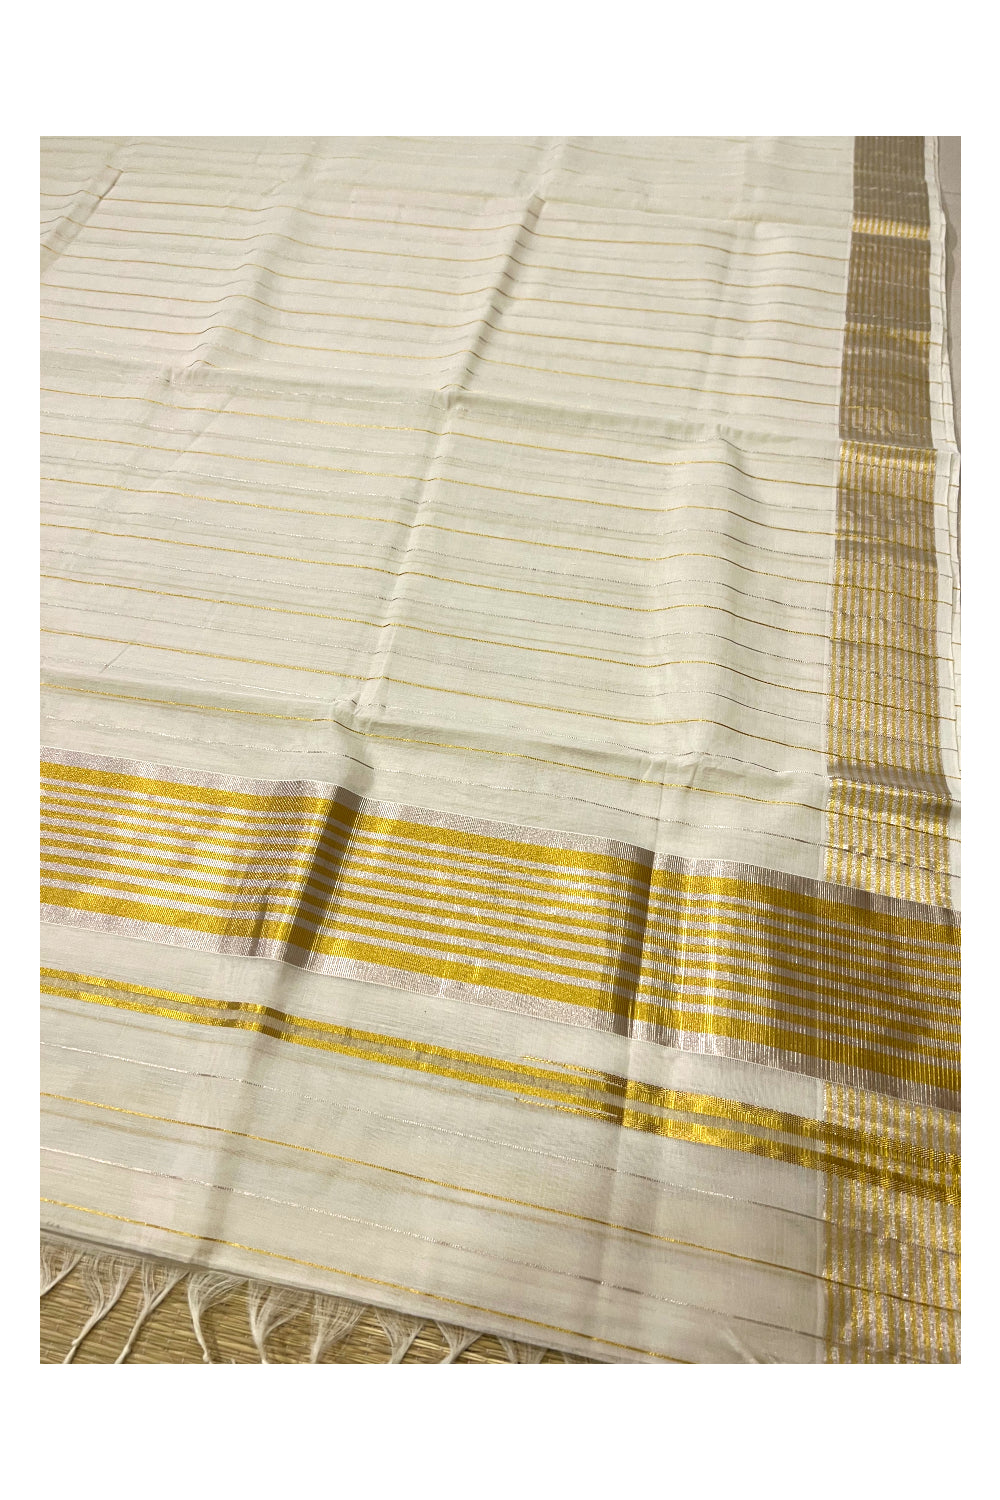 Southloom™ Premium Handloom Kasavu Saree with Silver and Golden Kasavu Lines Across Body